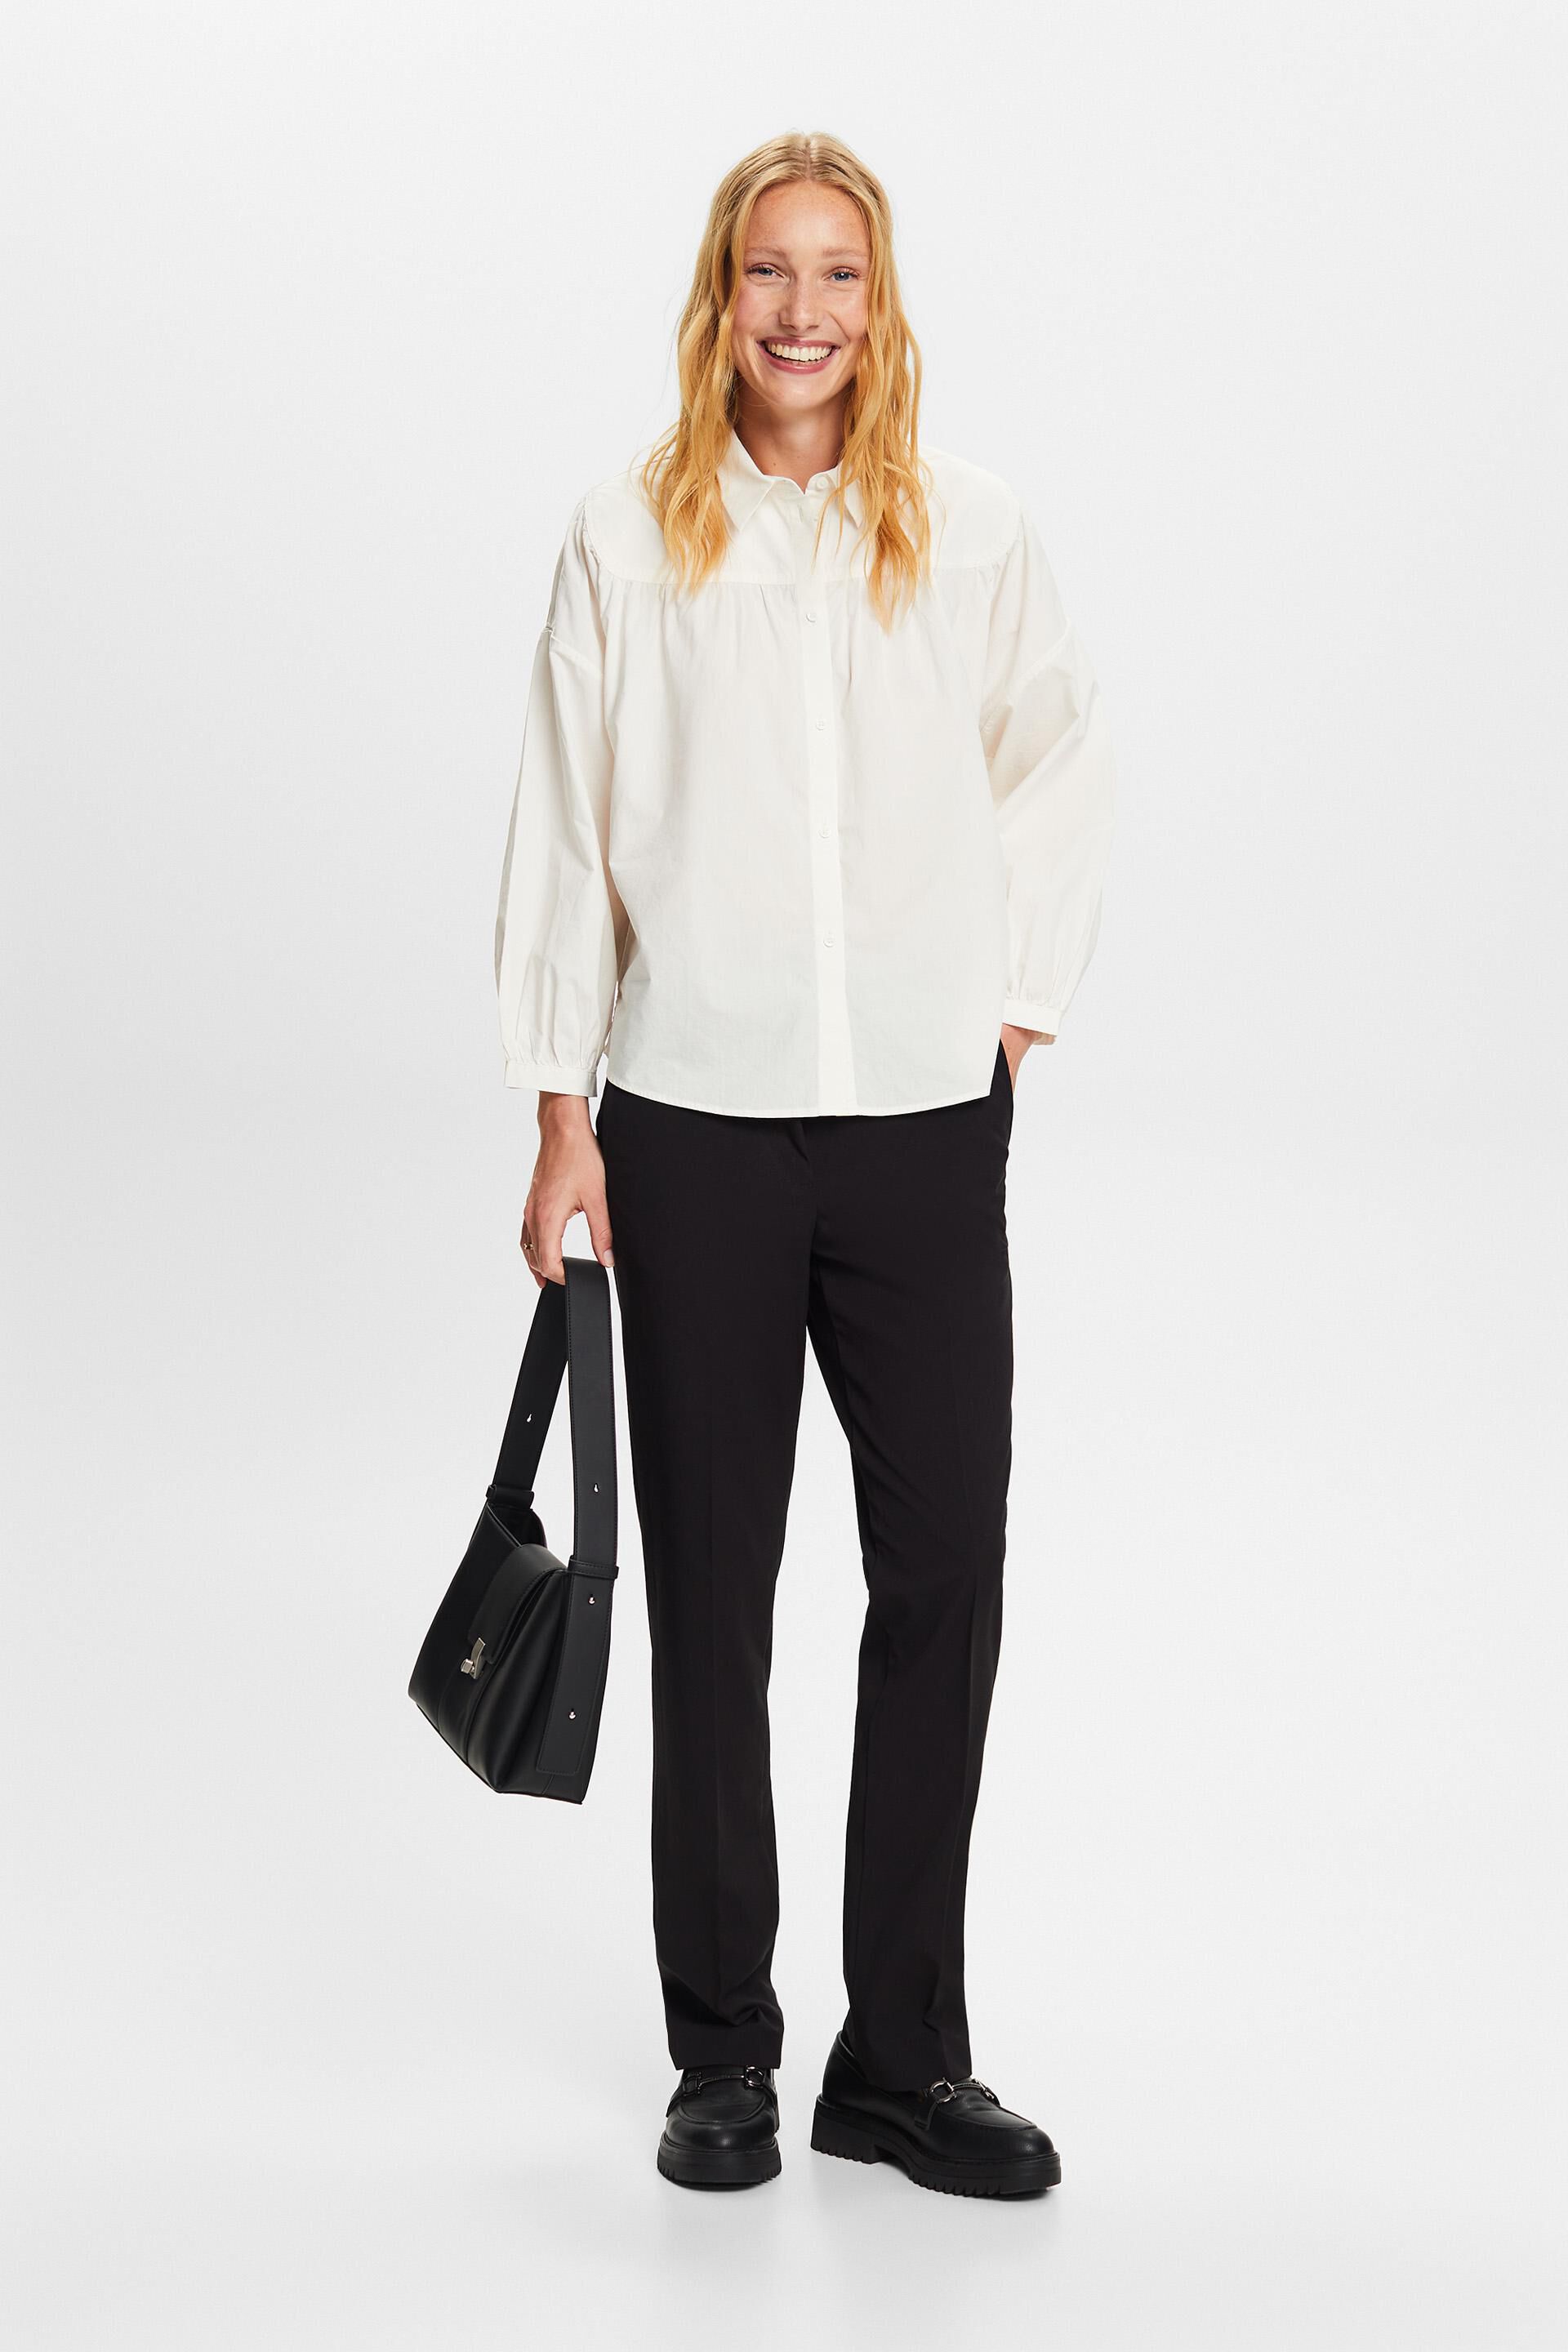 Esprit Poplin 100% cotton blouse,